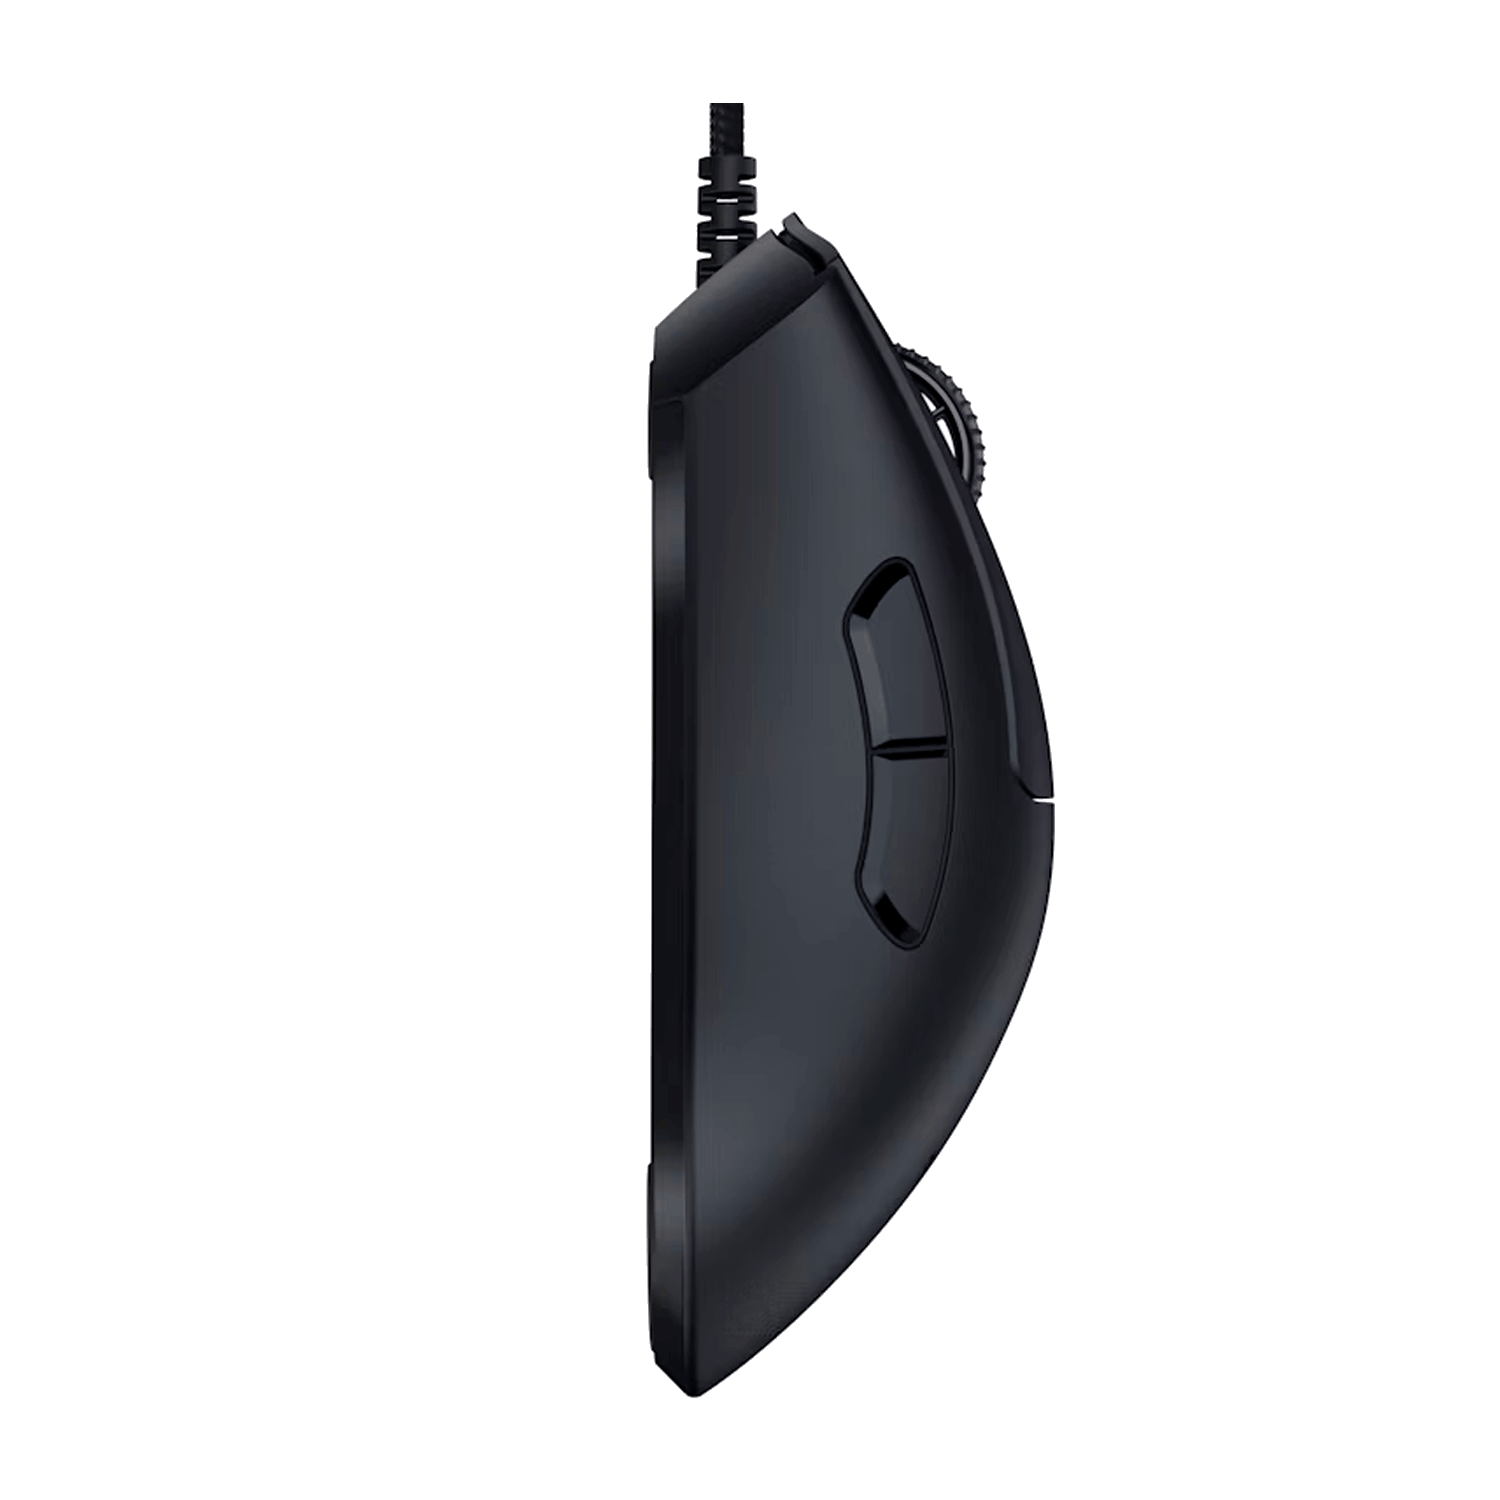 Mouse Razer Deathadder V3 / com Fio - Preto (RZ01-04640100-R3M1)